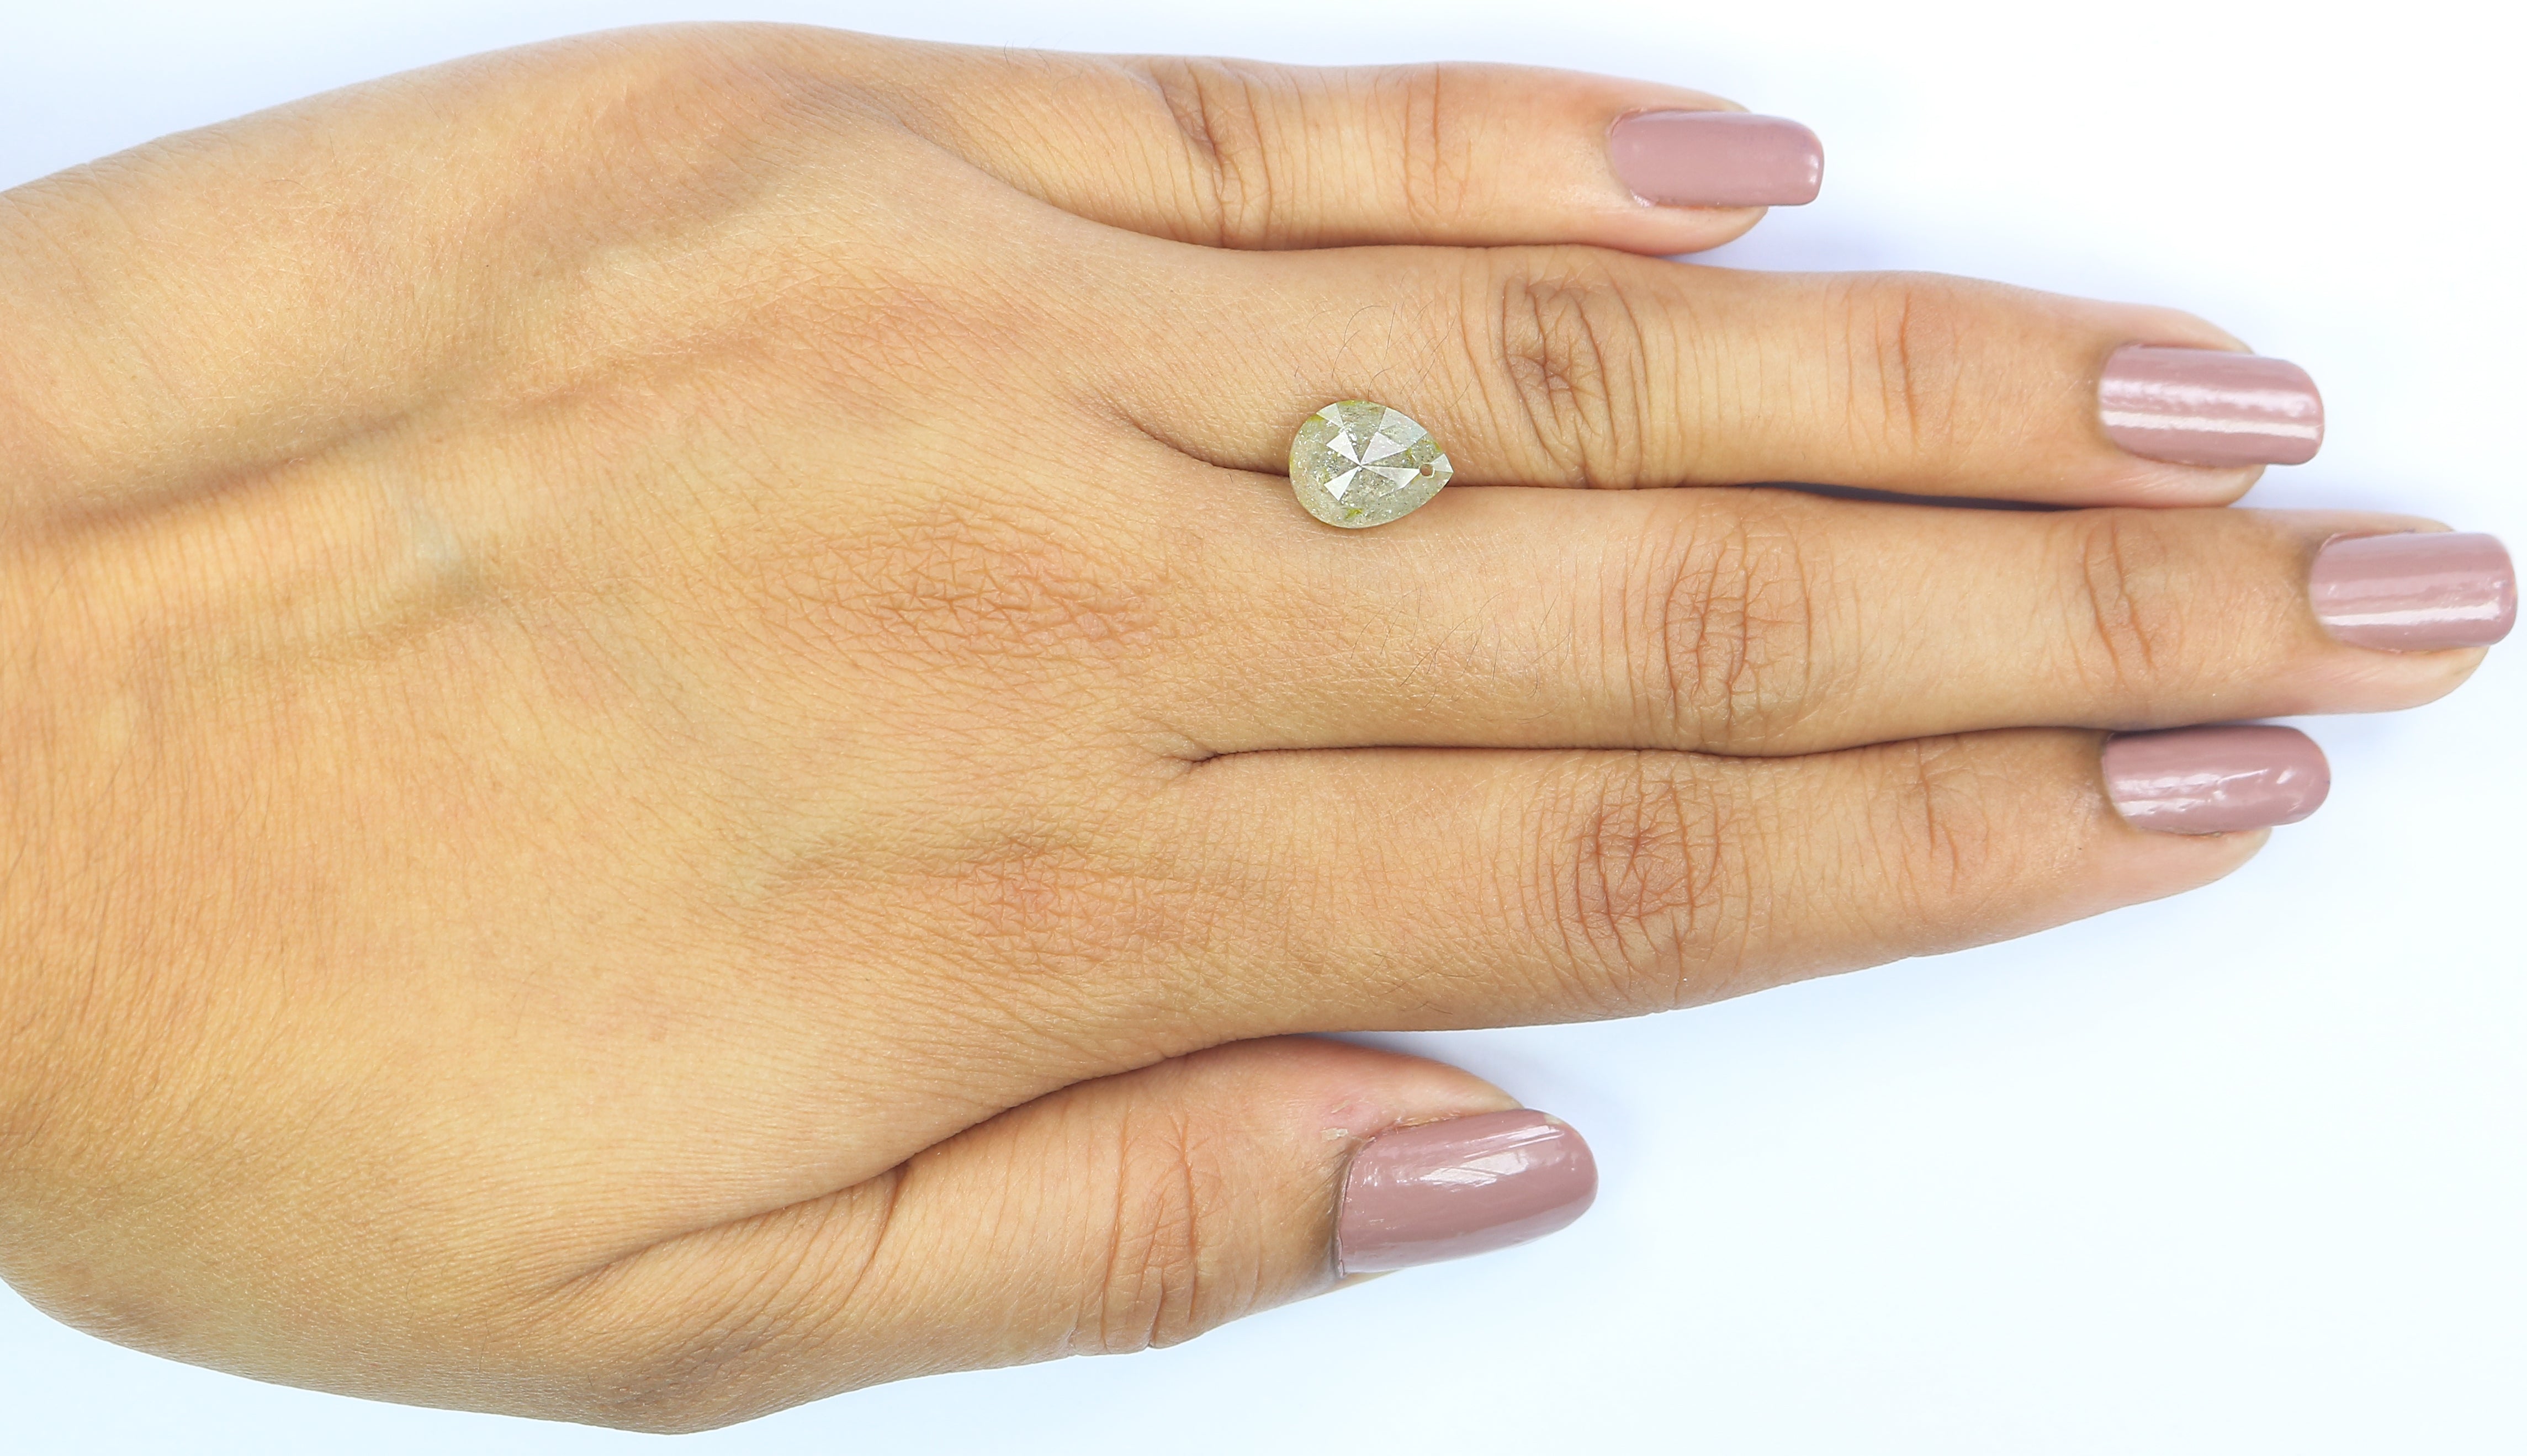 Natural Loose Pear Diamond, Yellow Grey Color Pear Diamond, Natural Loose Diamond, Pear Cut Diamond, Pear Diamond 2.98 CT Pear Shape KDL7462